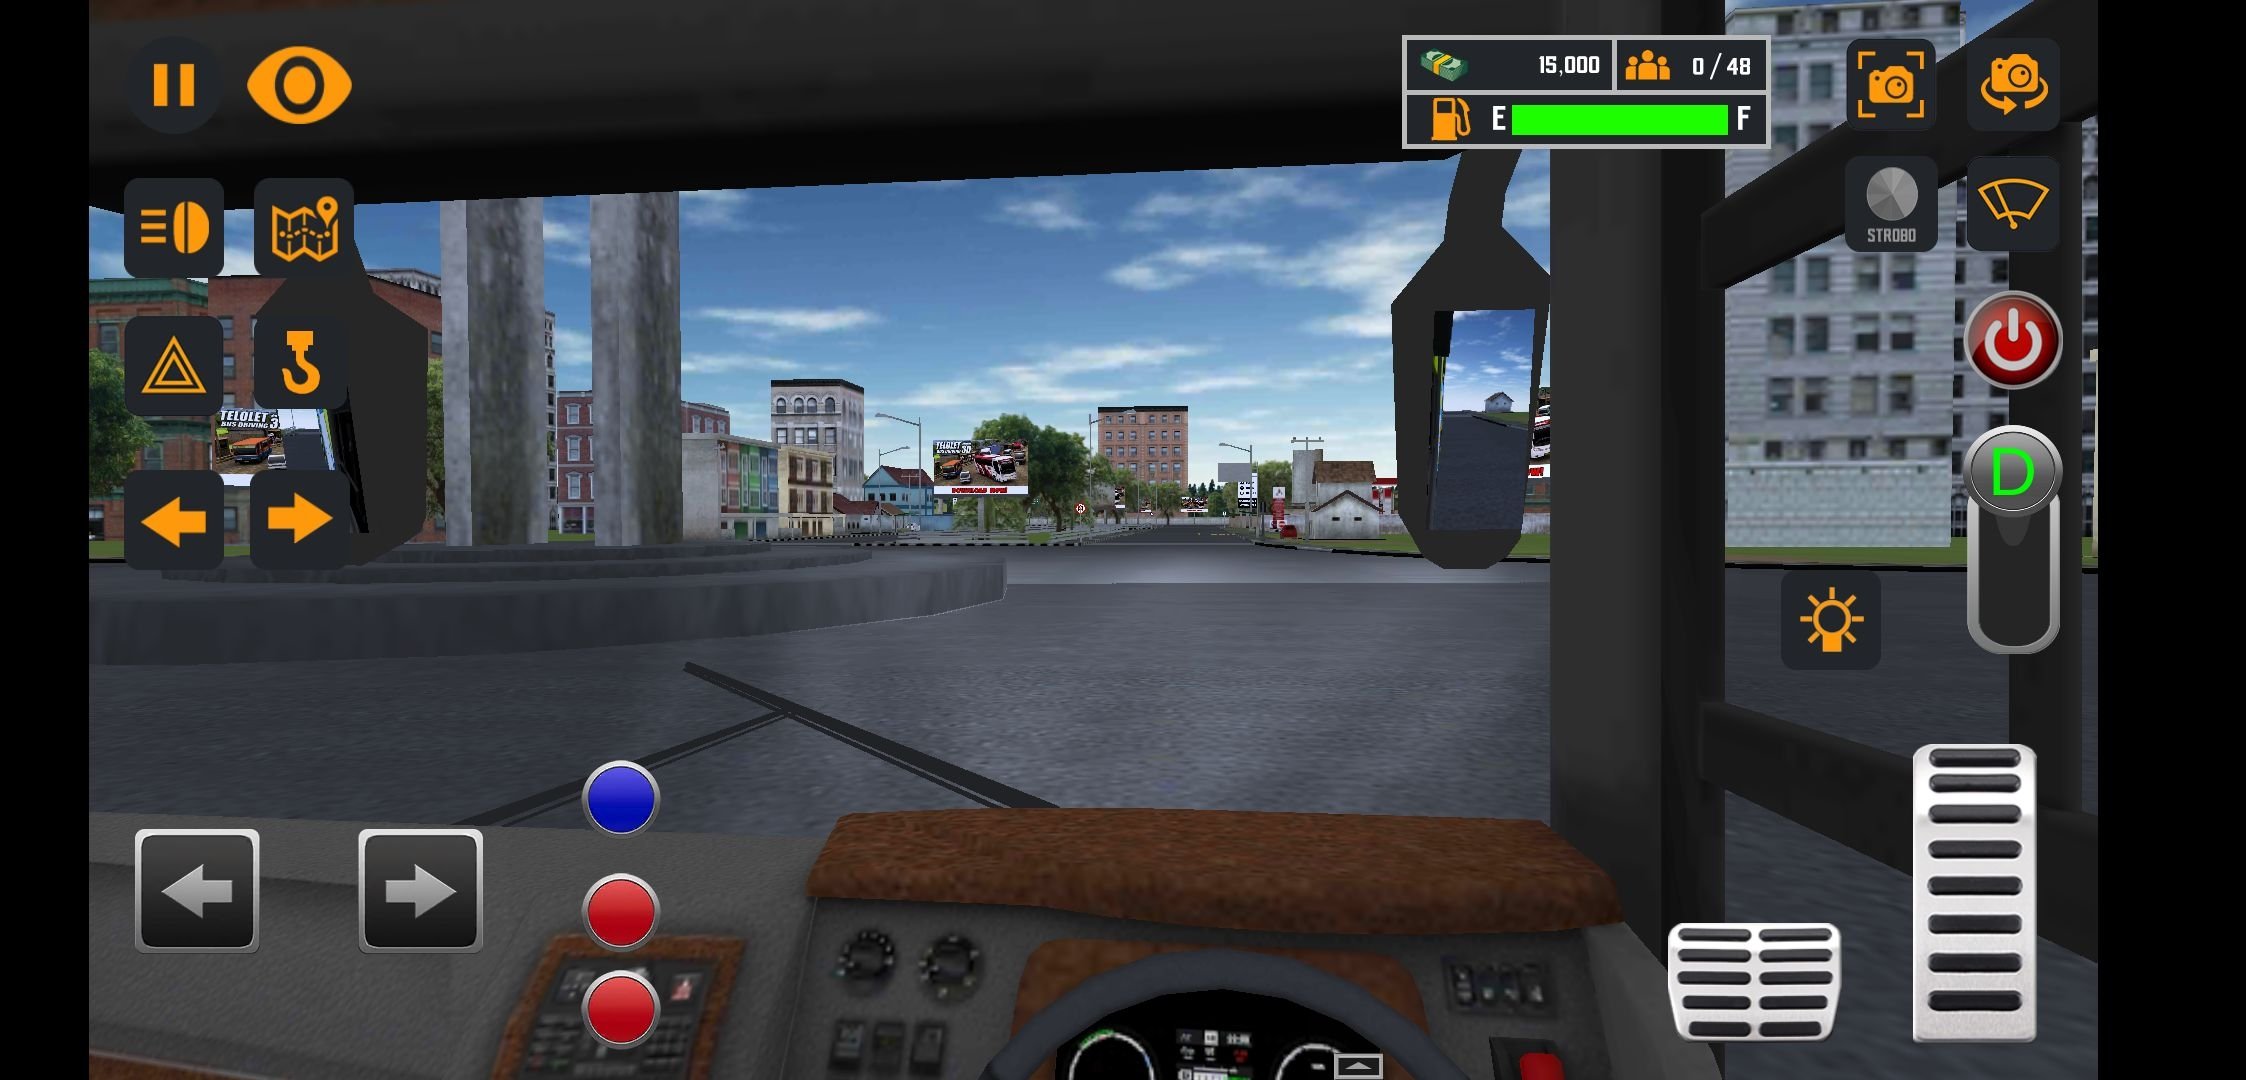 Bus Simulator 2023 download the last version for windows